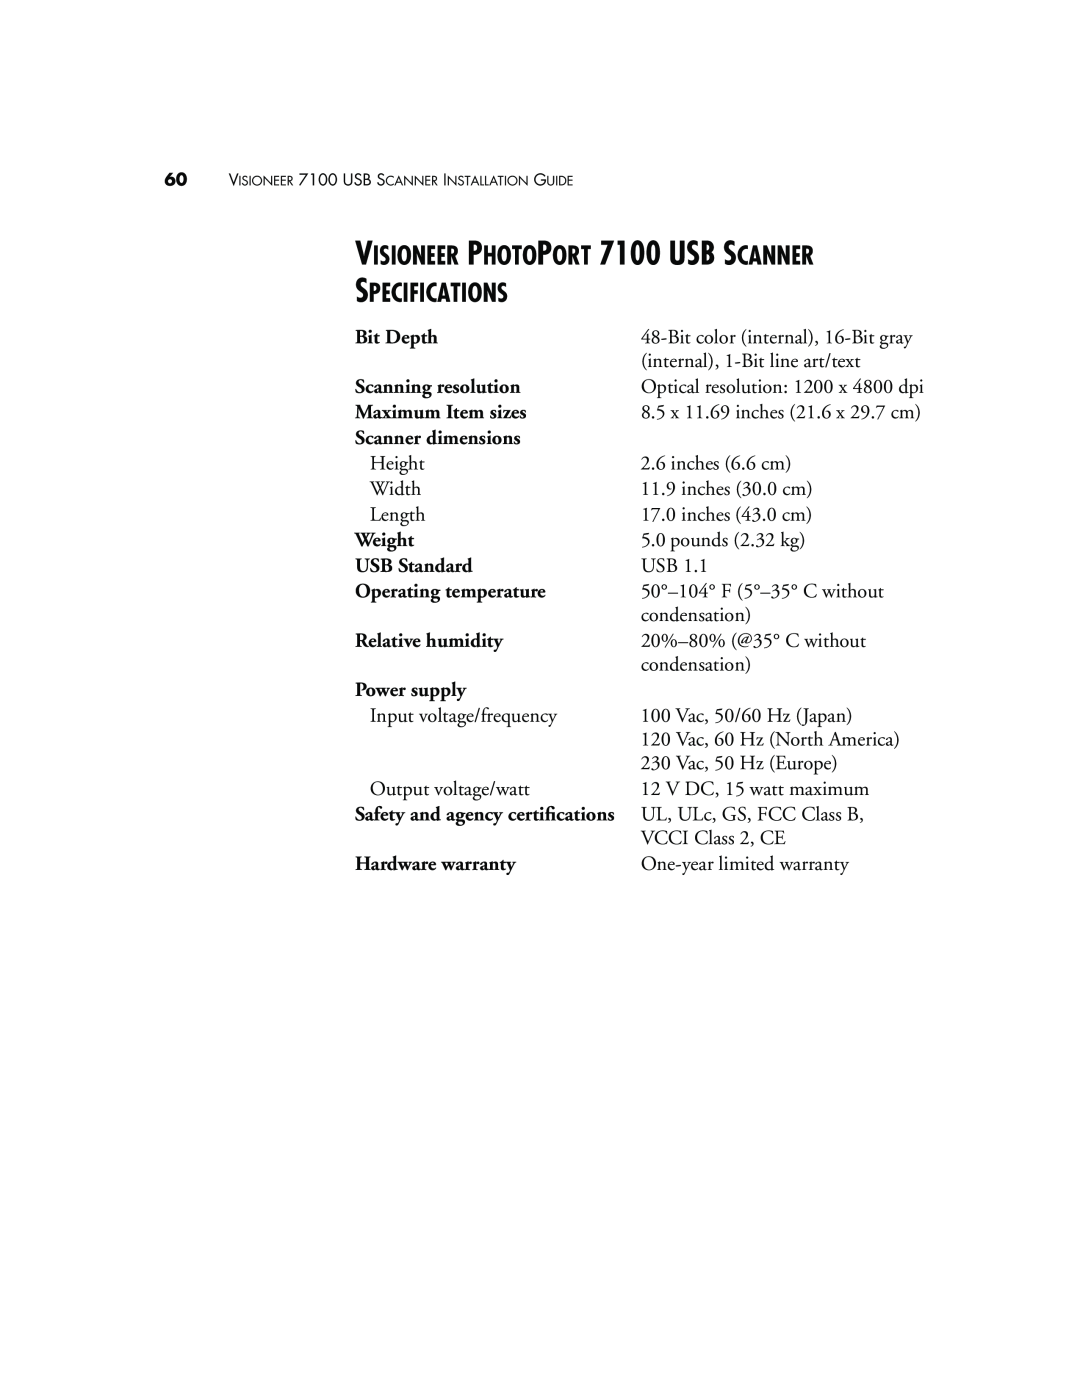 Visioneer manual VISIONEER PHOTOPORT 7100 USB SCANNER SPECIFICATIONS 